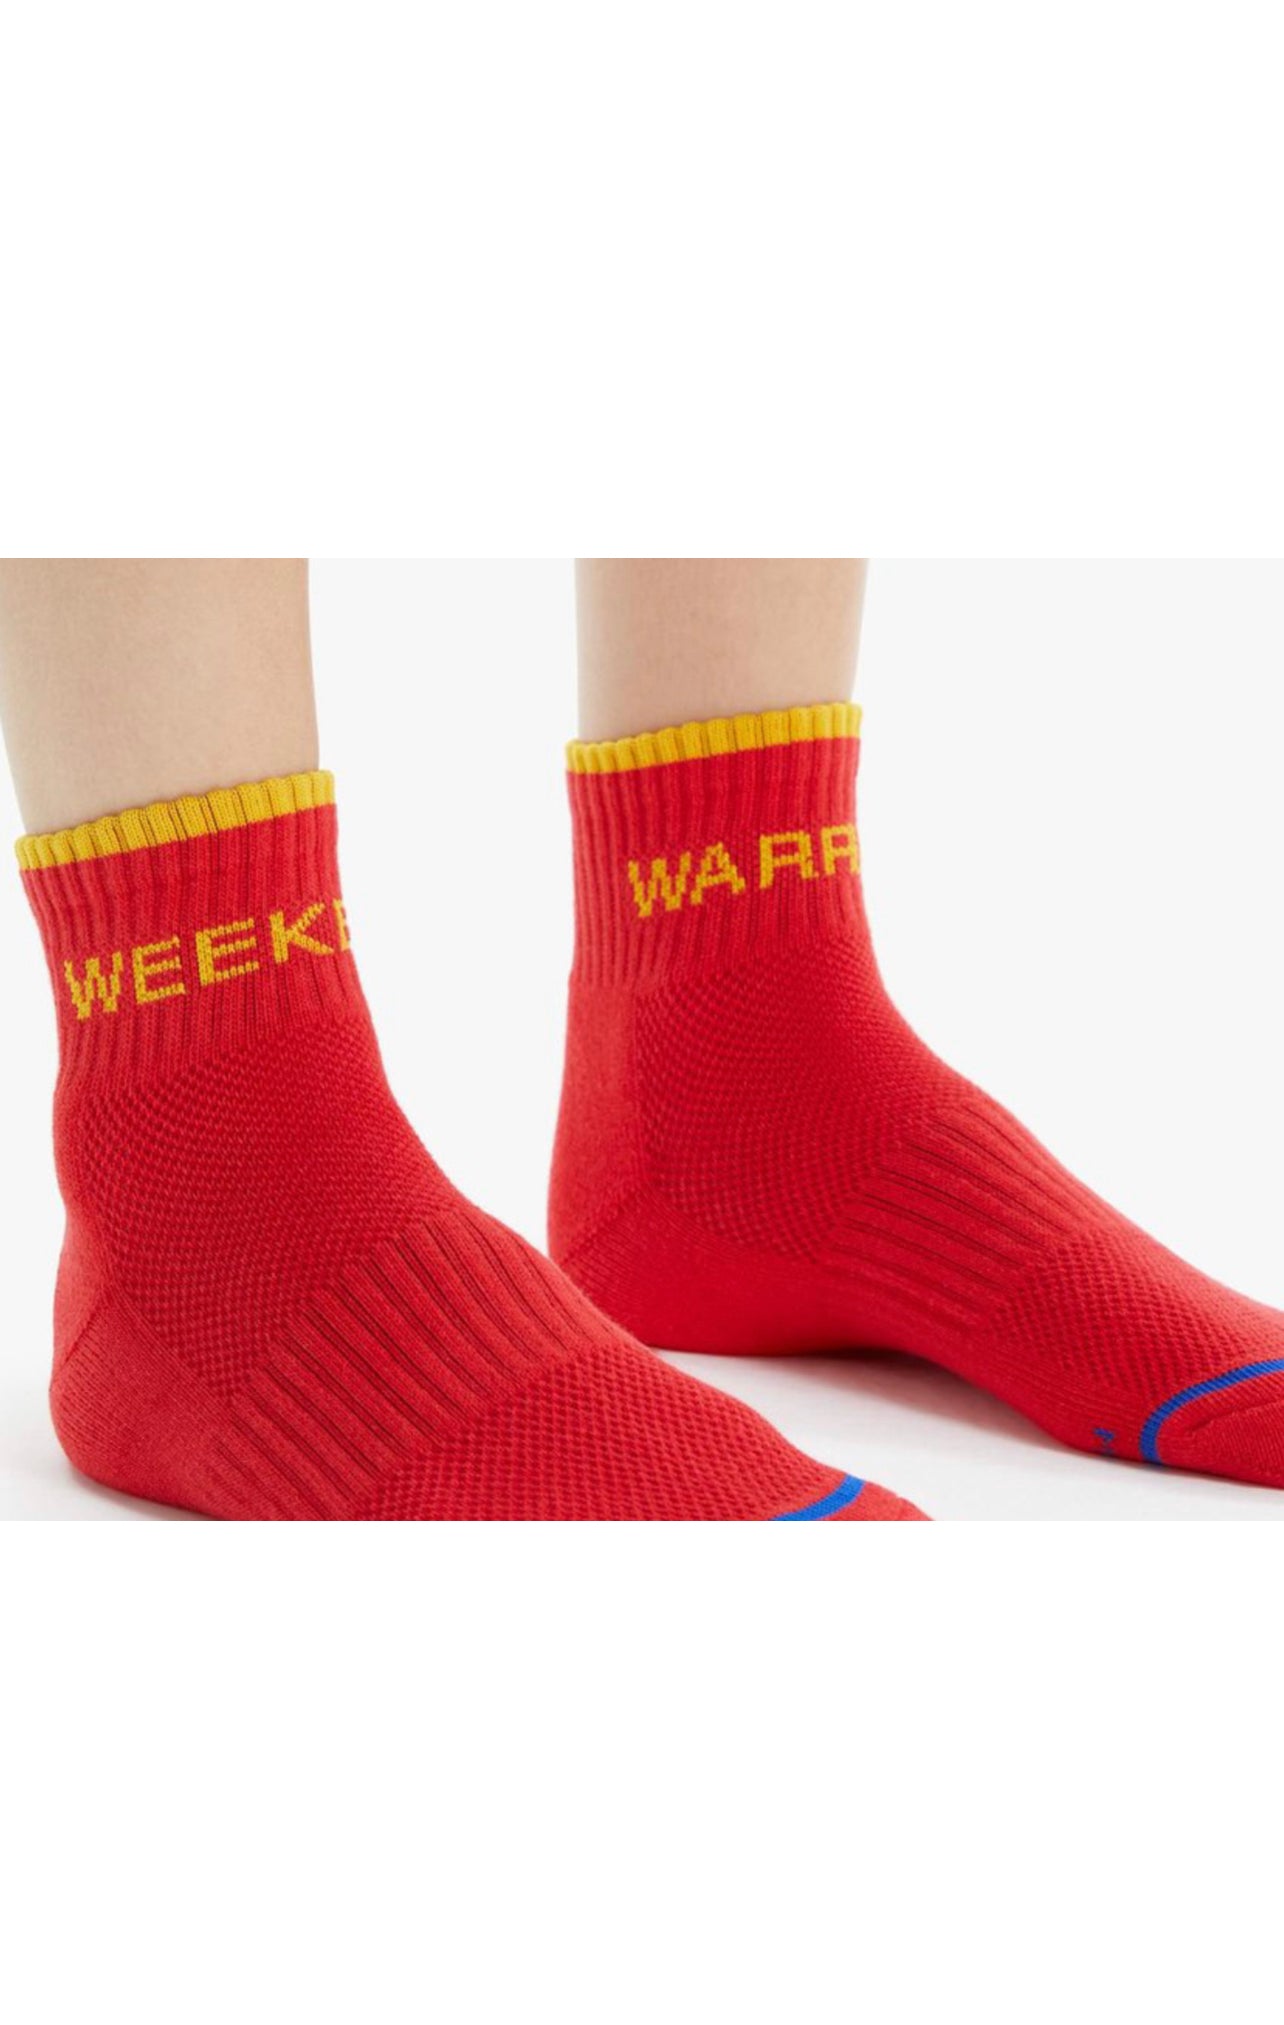 Mother "Weekend Warrior" Socks